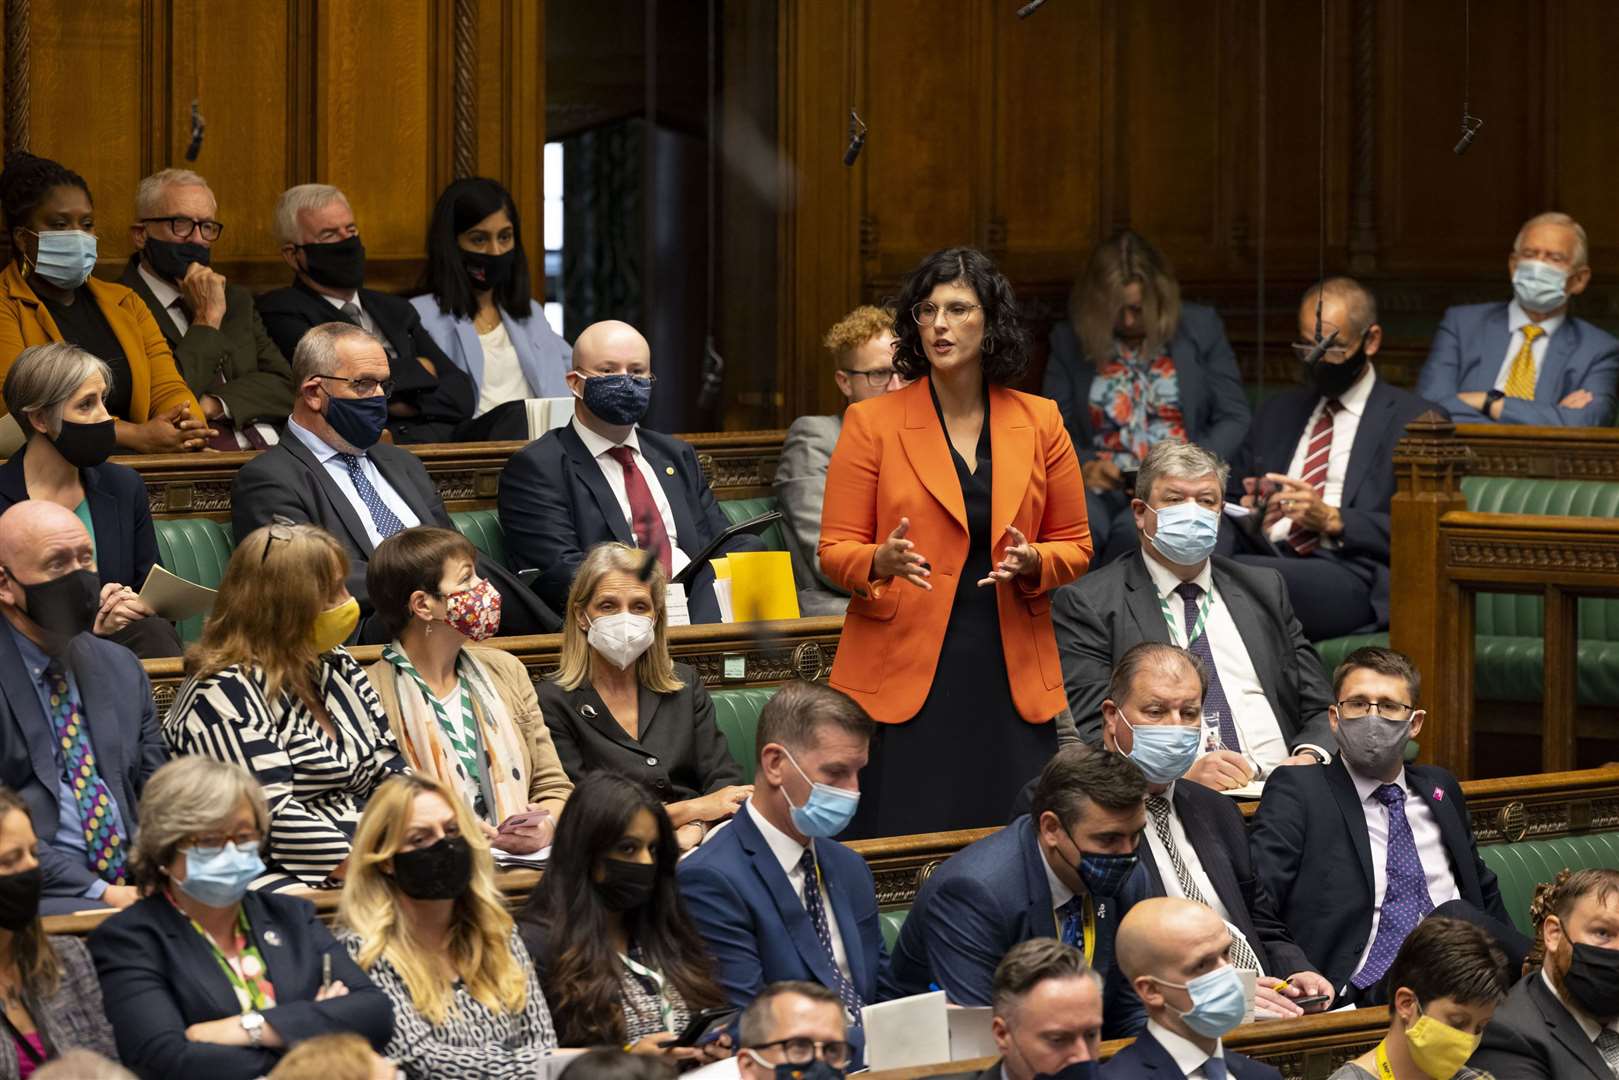 Liberal Democrat MP Layla Moran speaking during the debate (UK Parliament/Roger Harris/PA)